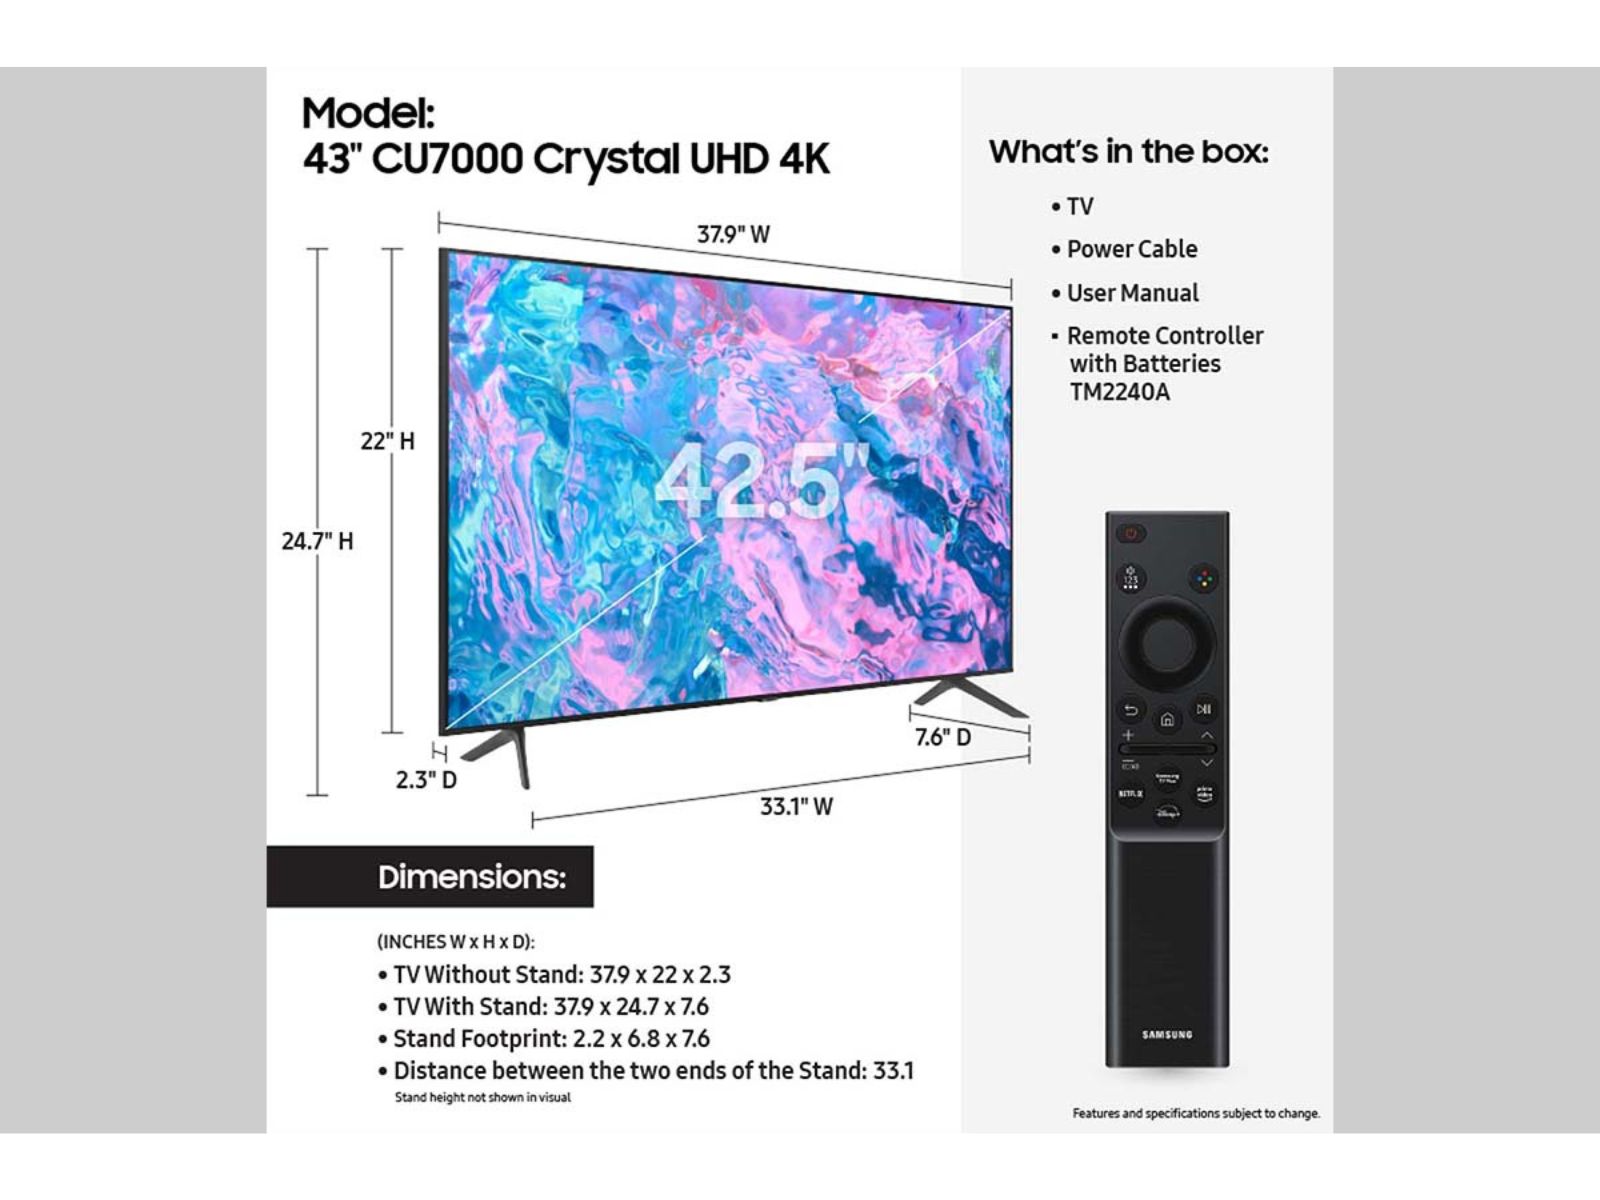 Samsung 55 Class TU690T Crystal UHD 4K Smart Tizen TV UN55TU690TFXZA -  Best Buy